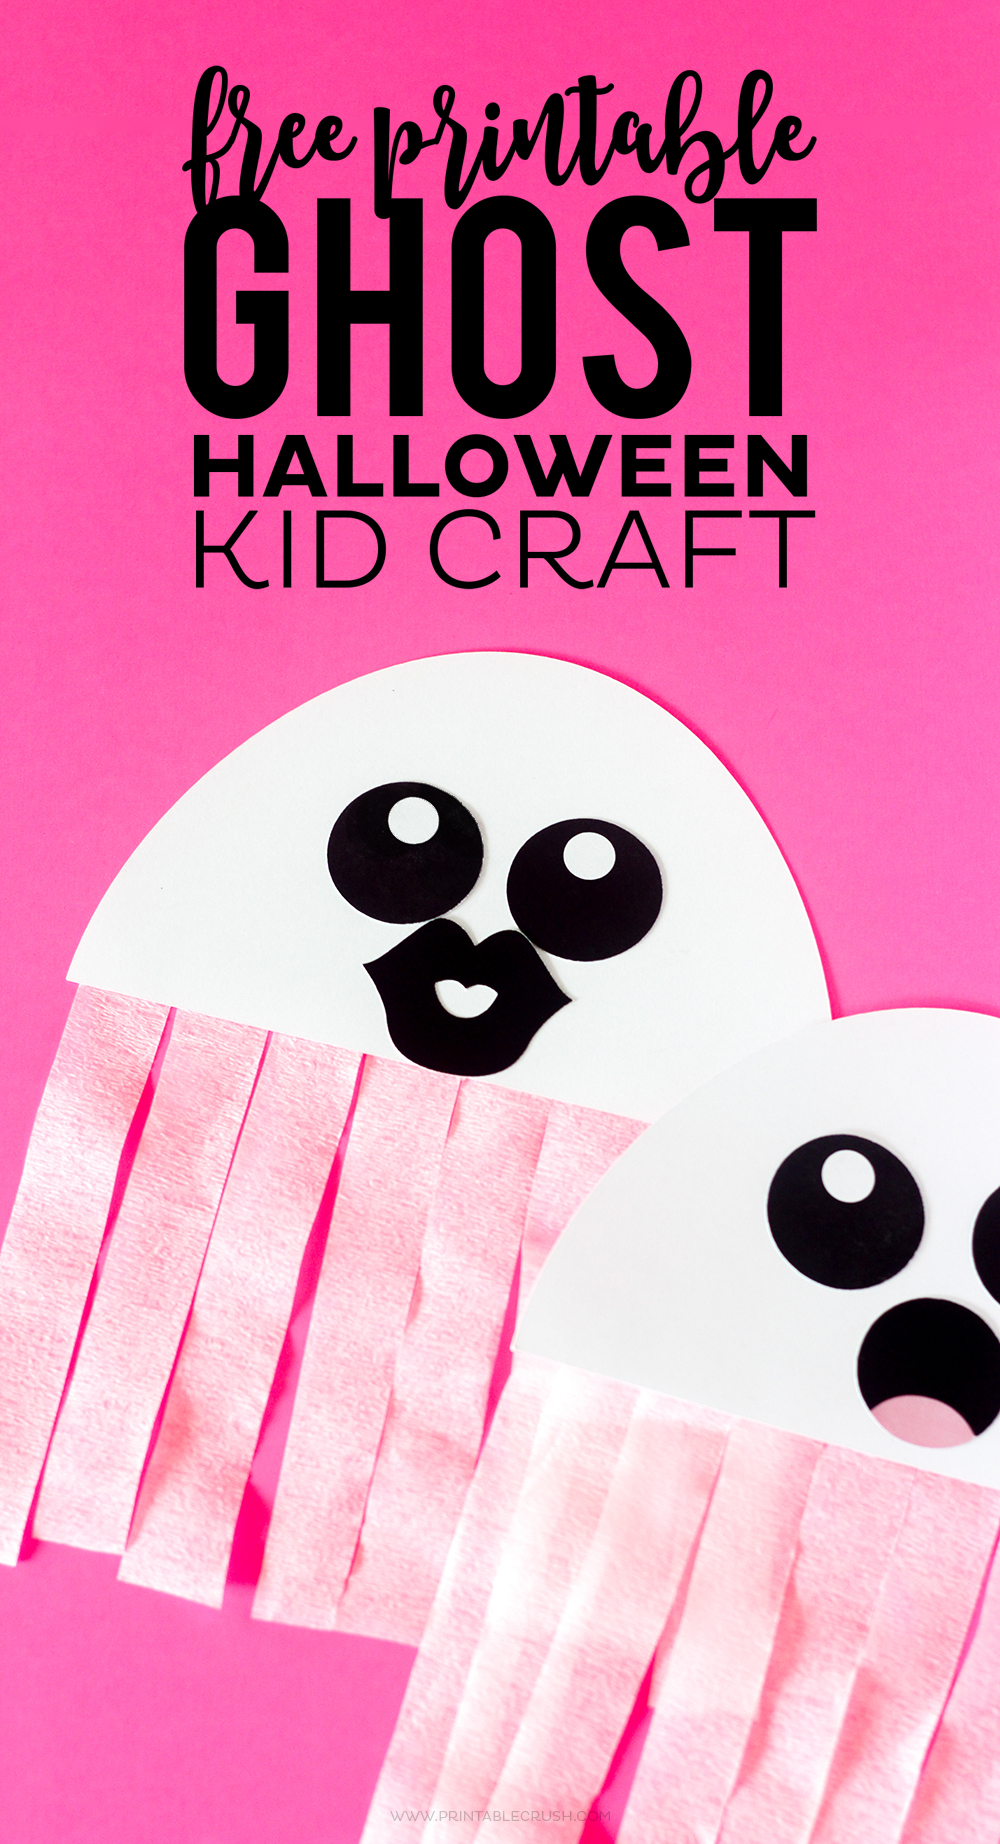 FREE Printable Ghost Halloween Craft Printable Crush